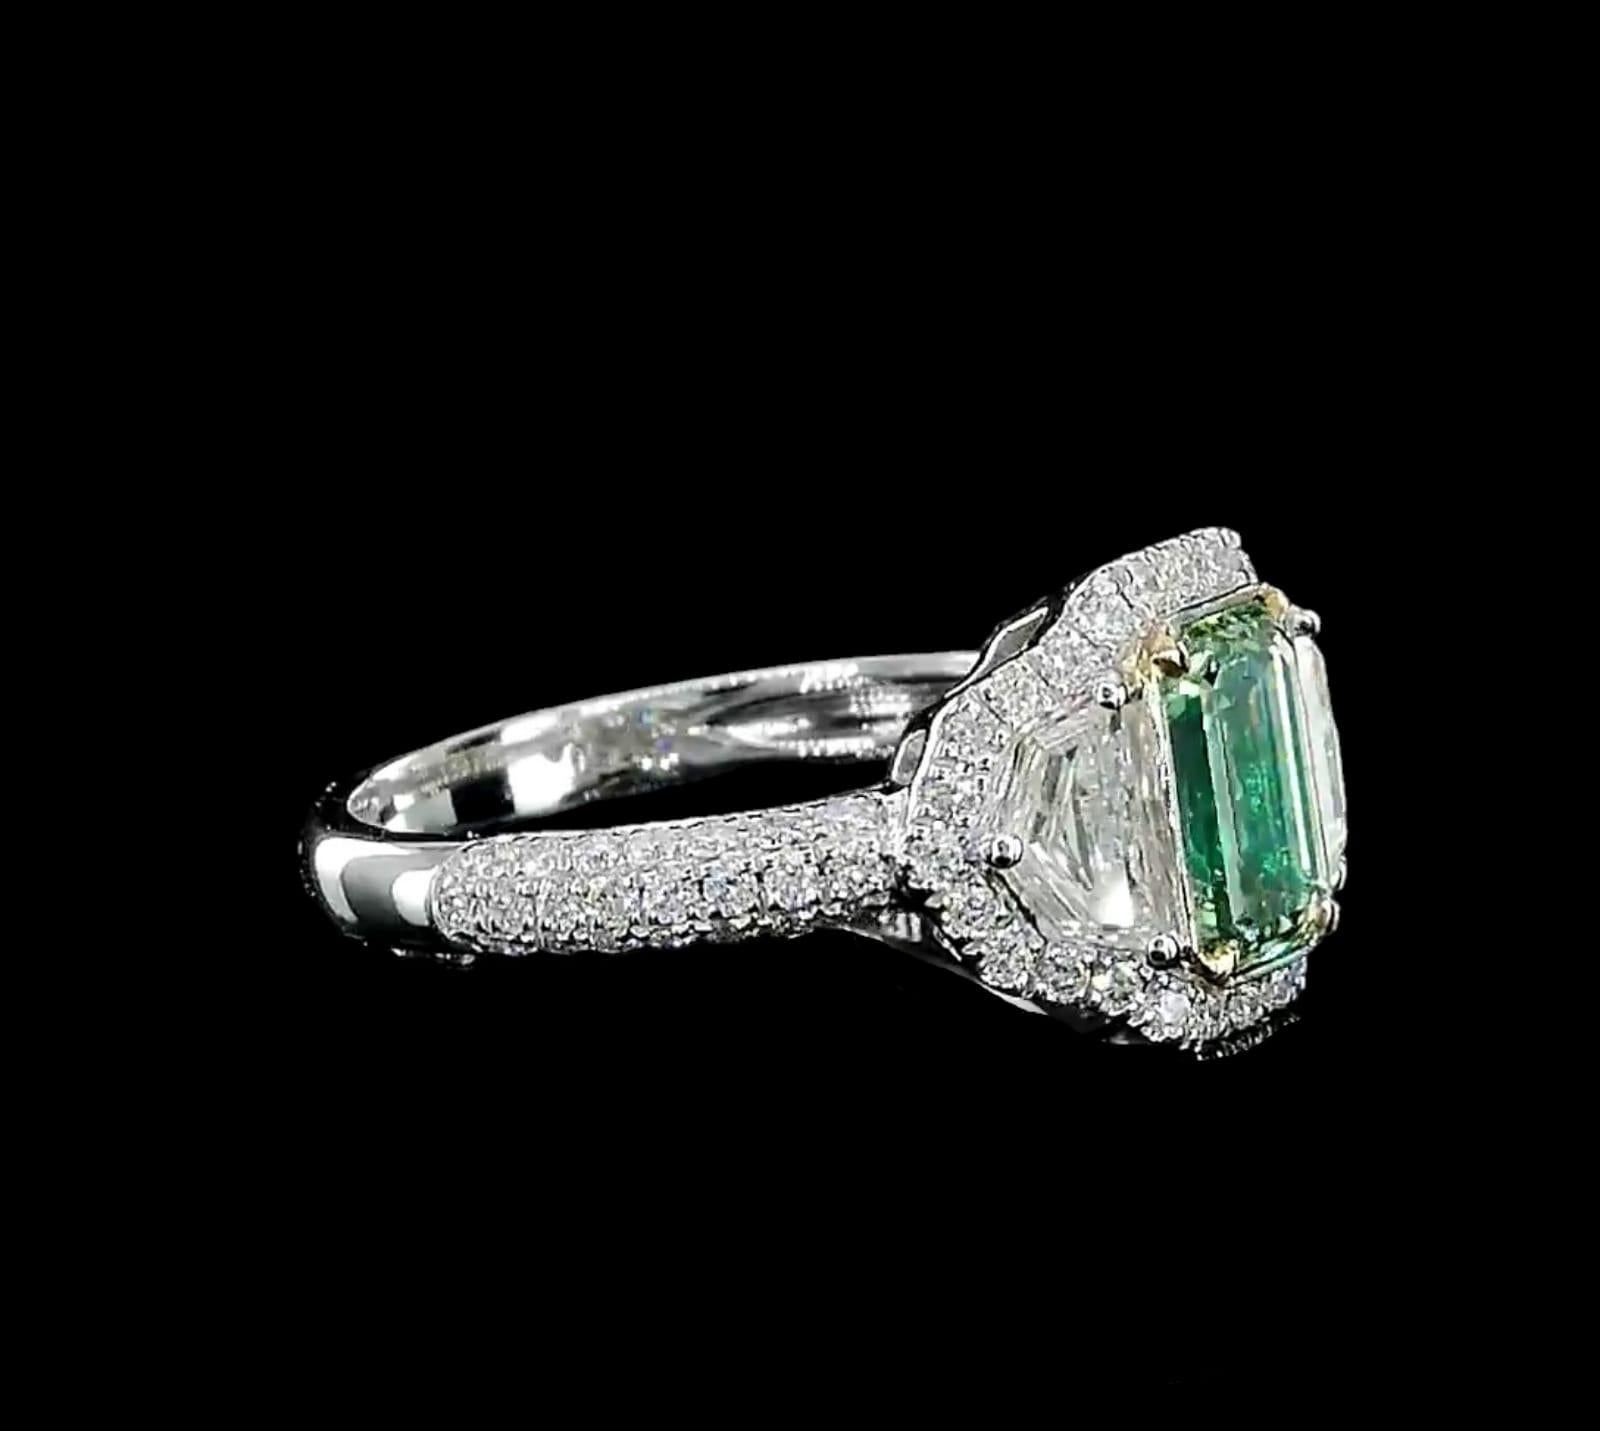 Emerald Cut 1.06 Carat Fancy Green Diamond Ring VS Clarity AGL Certified For Sale